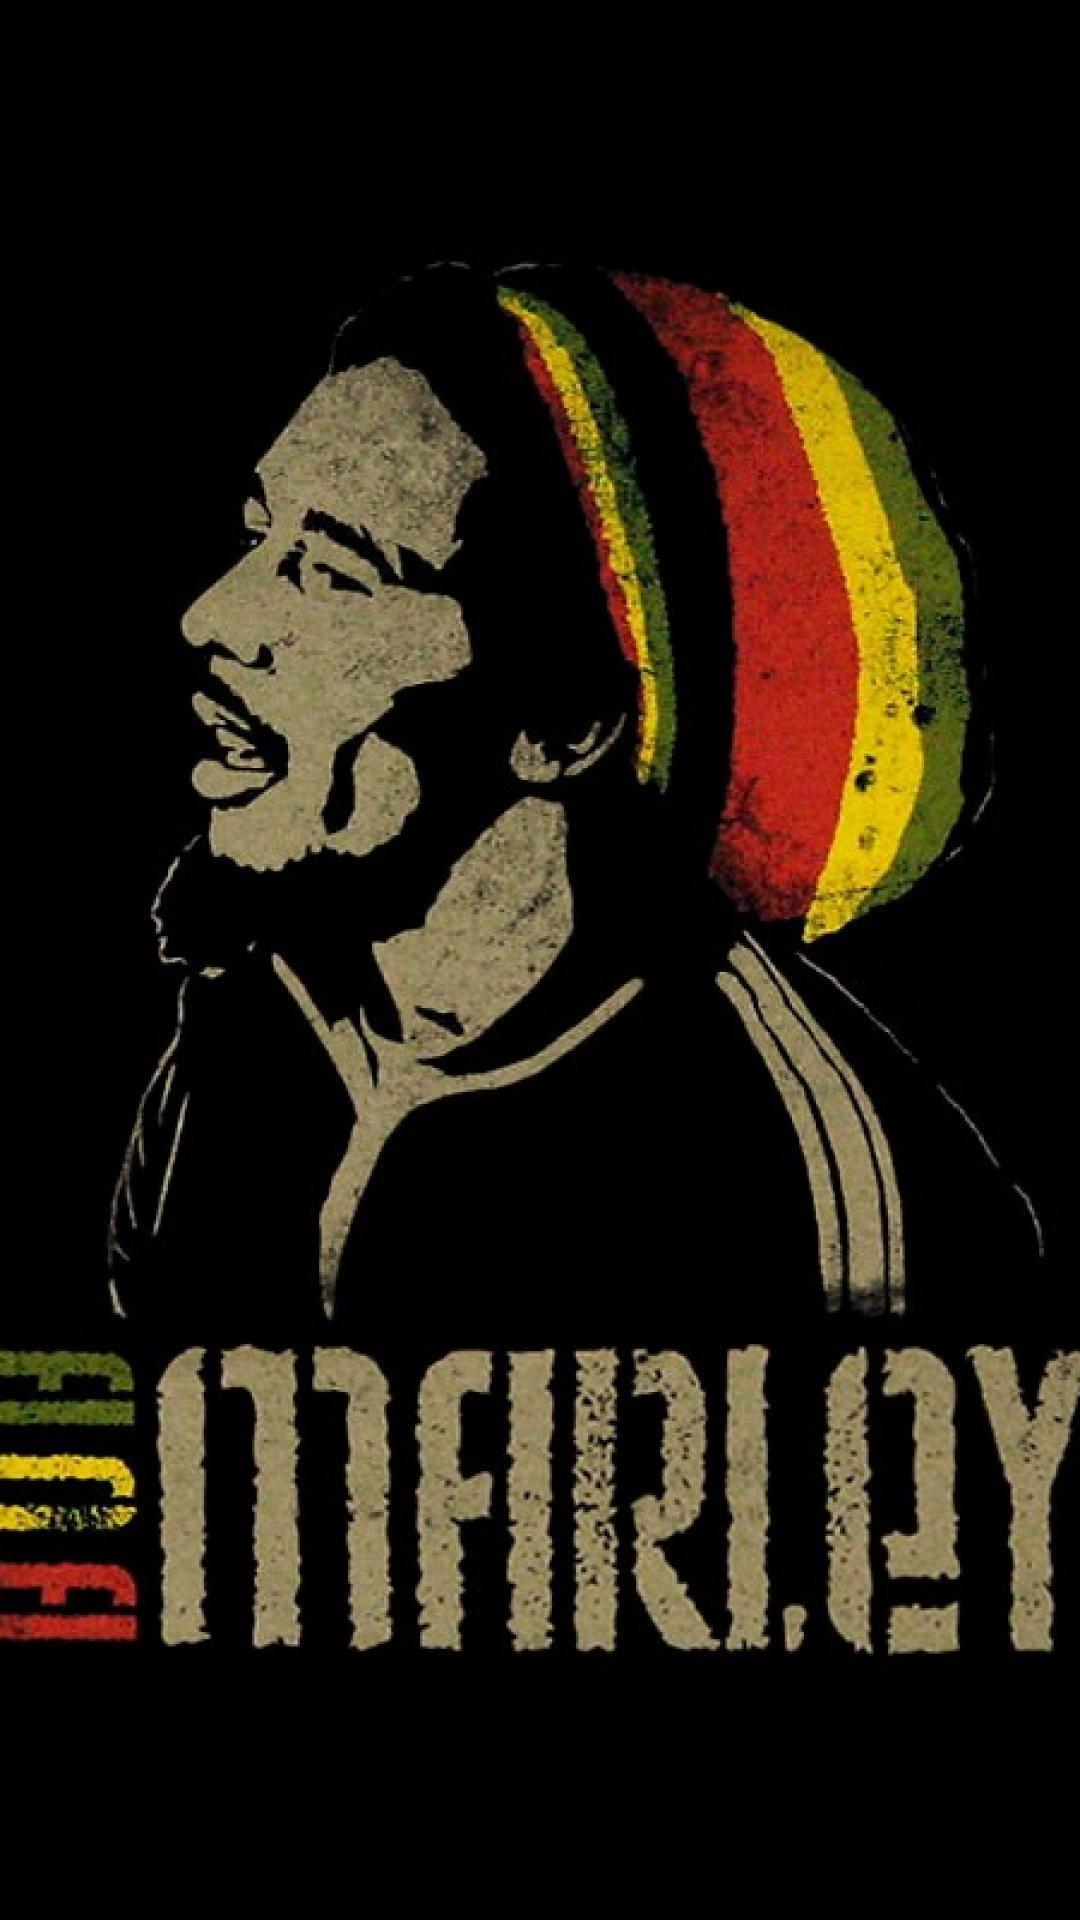 Android marijuana bob marley rasta reggae rastafari rastaman